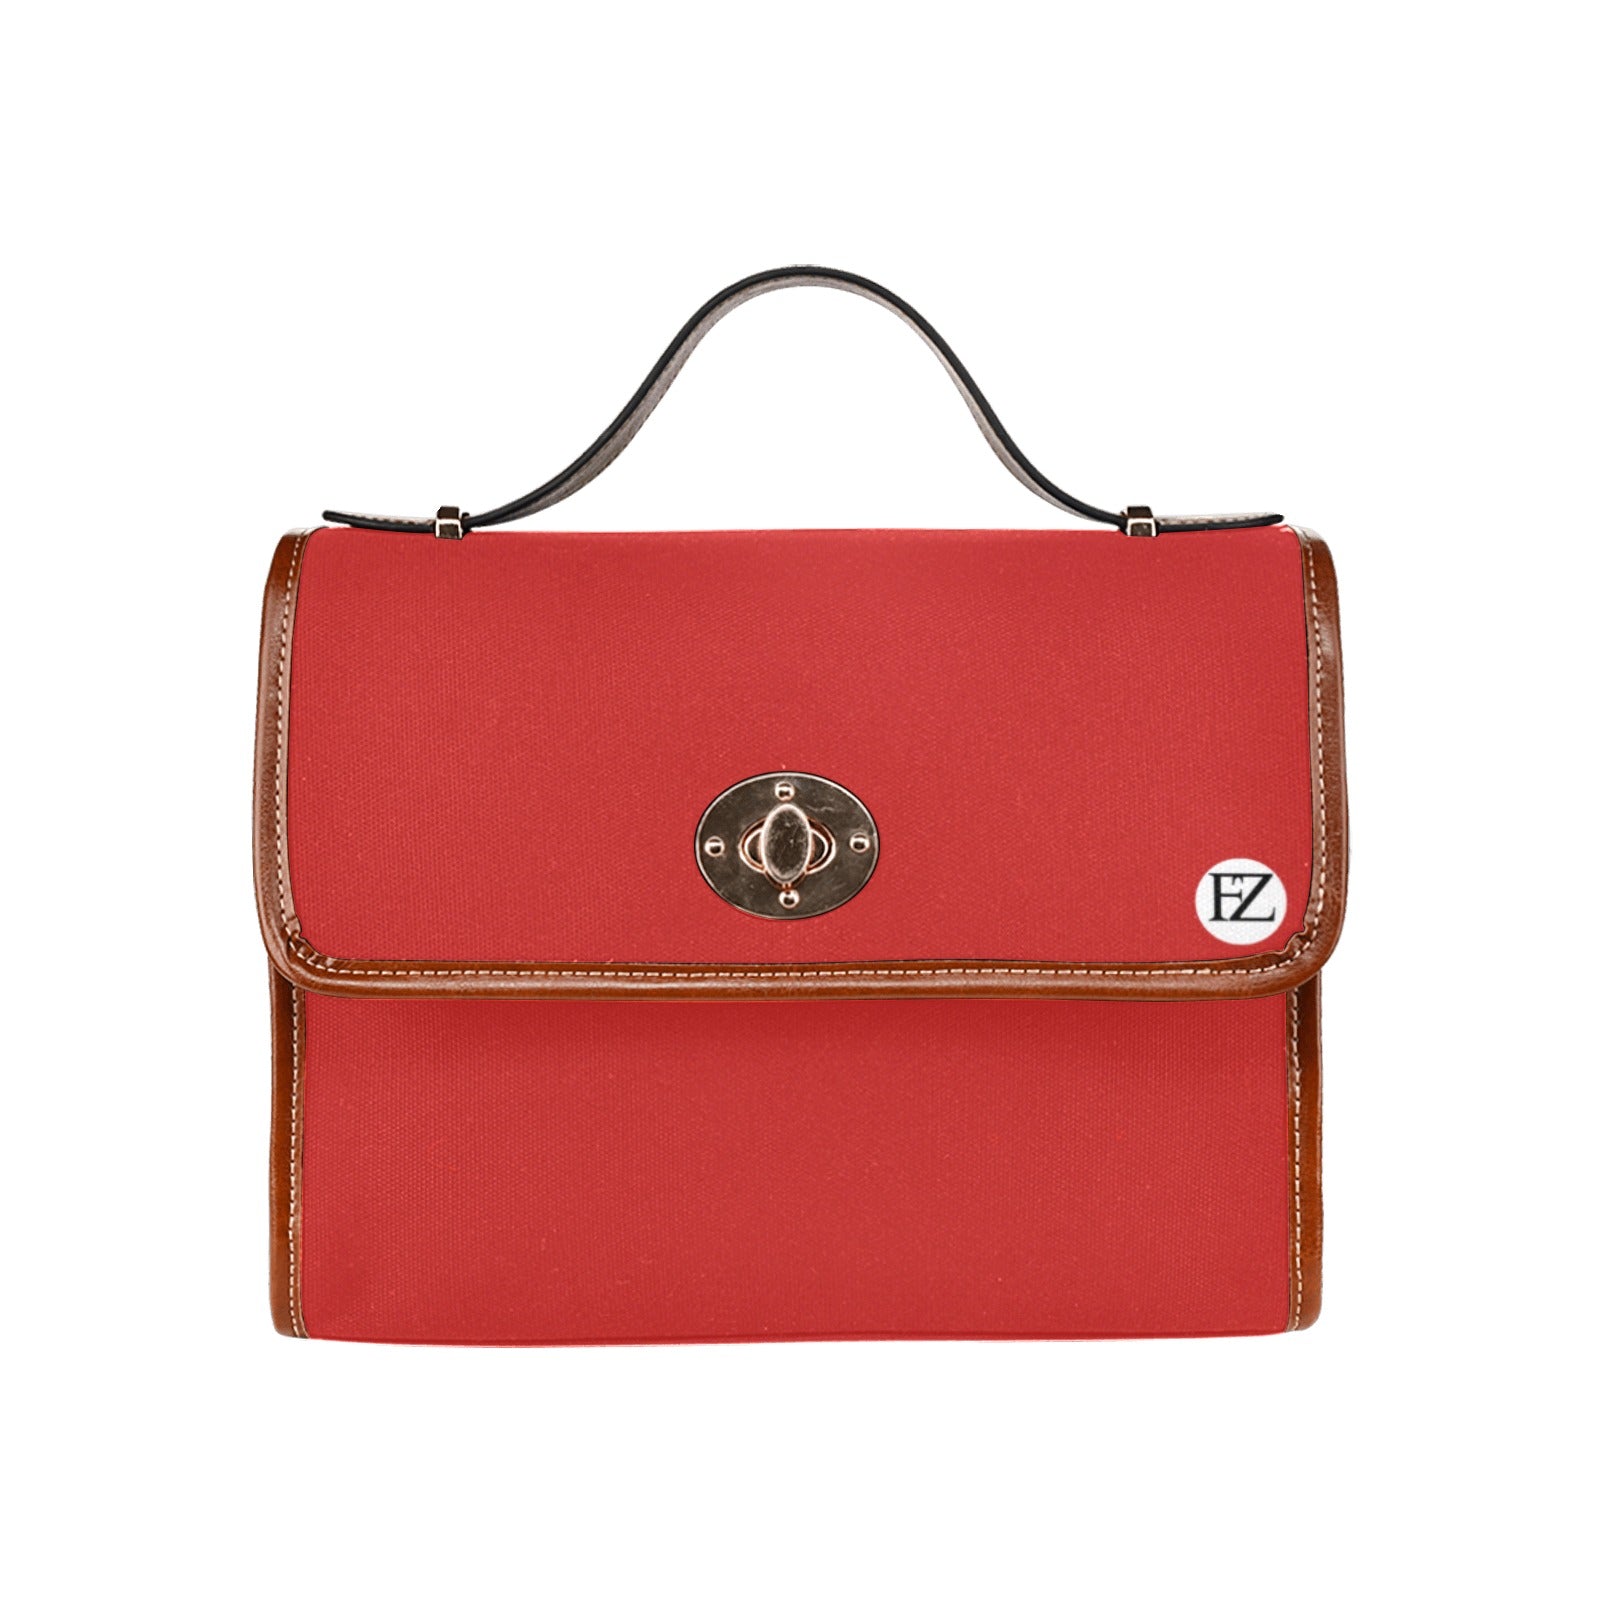 fz original handbag one size / fz - red all over print waterproof canvas bag(model1641)(brown strap)